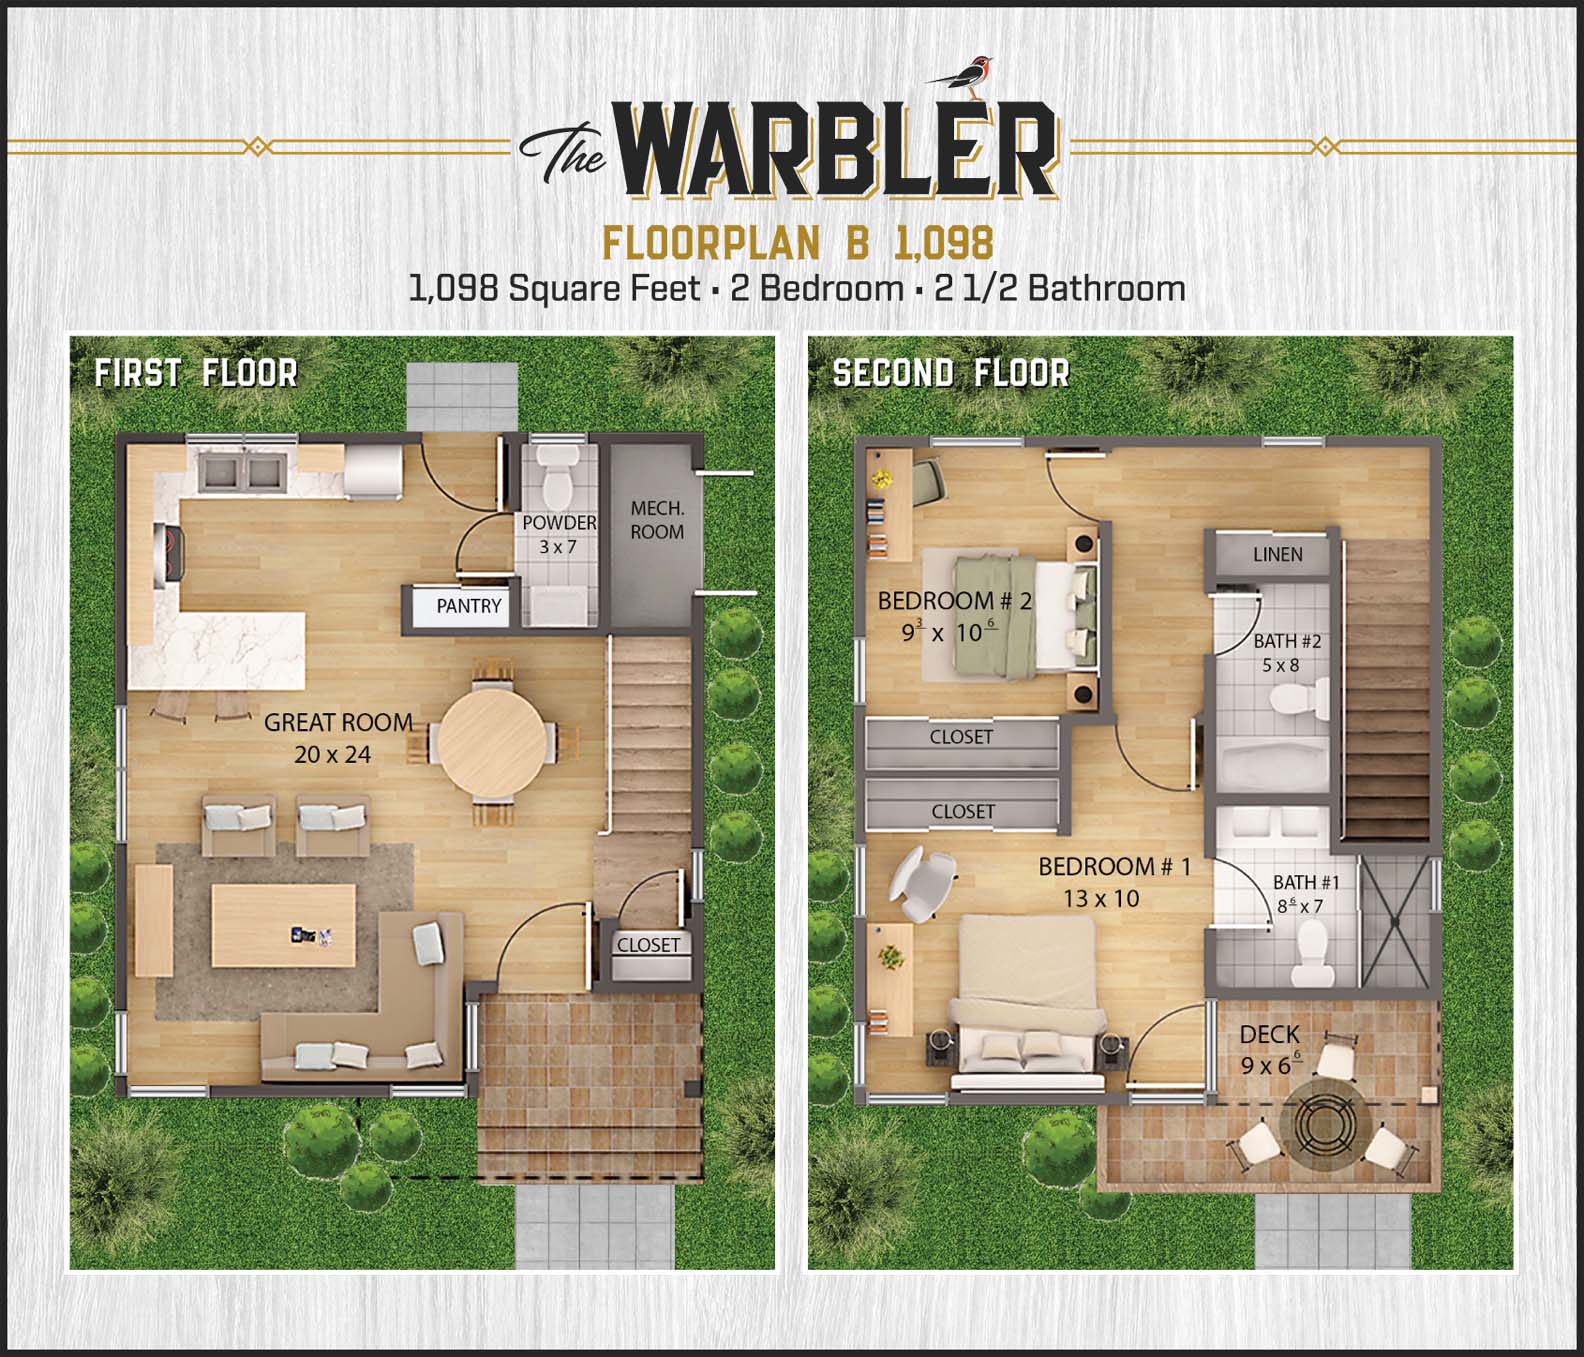 Warbler Floorplan